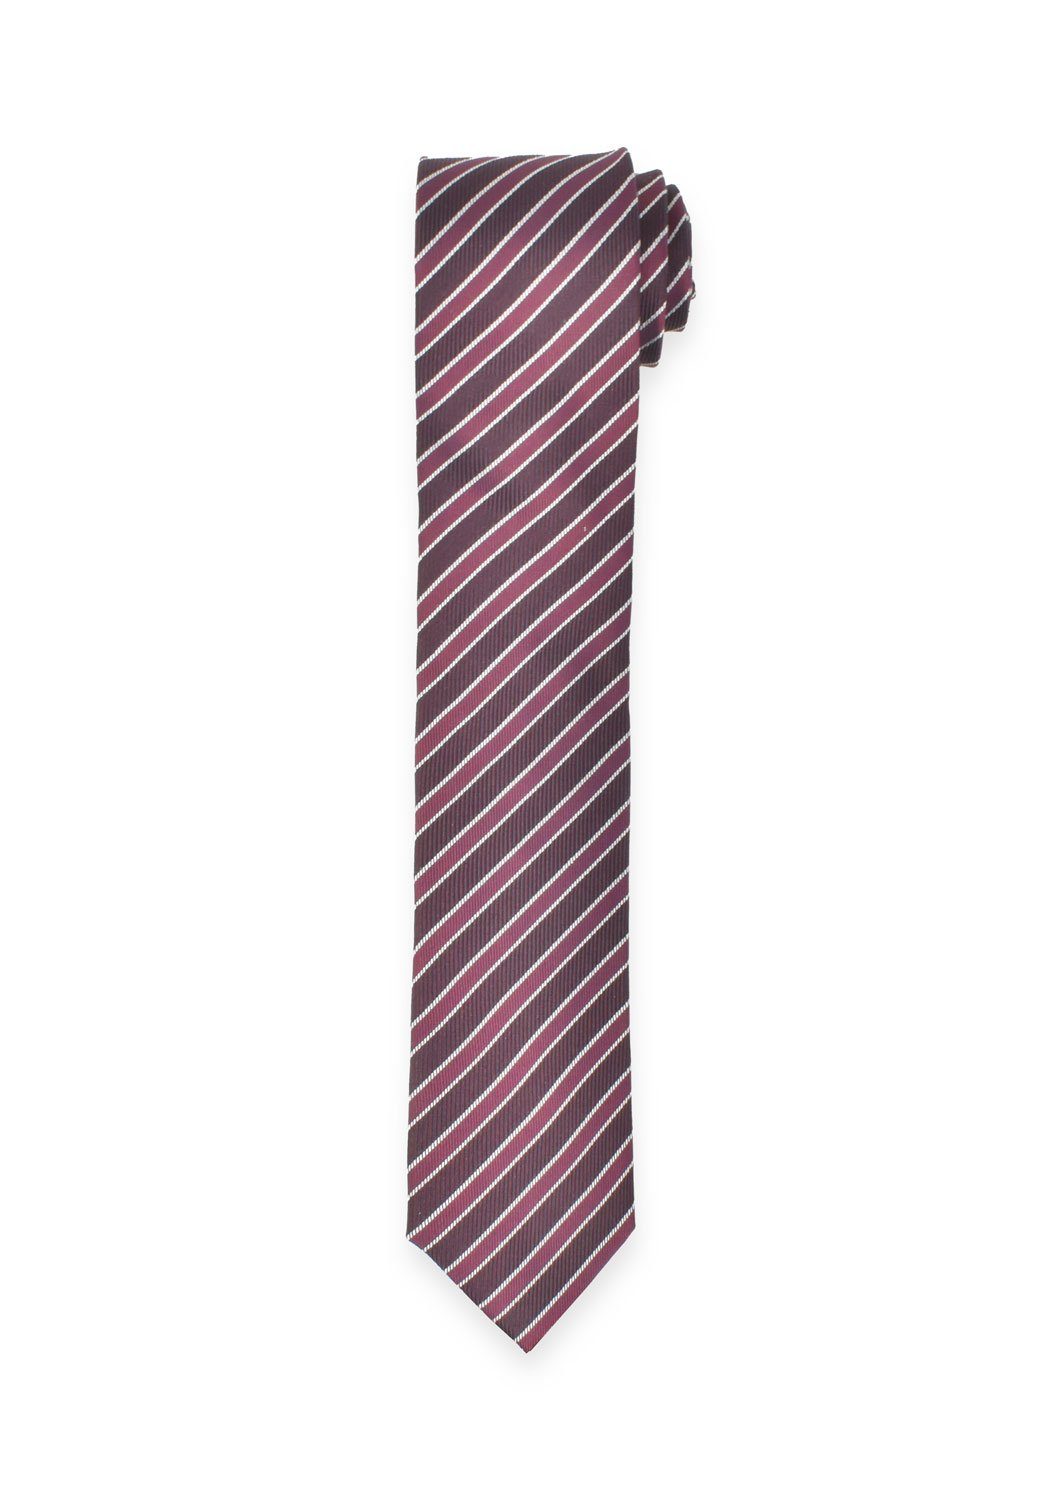 MARVELIS - Krawatte cm - Krawatte Gestreift Bordeaux/Rot - 6,5